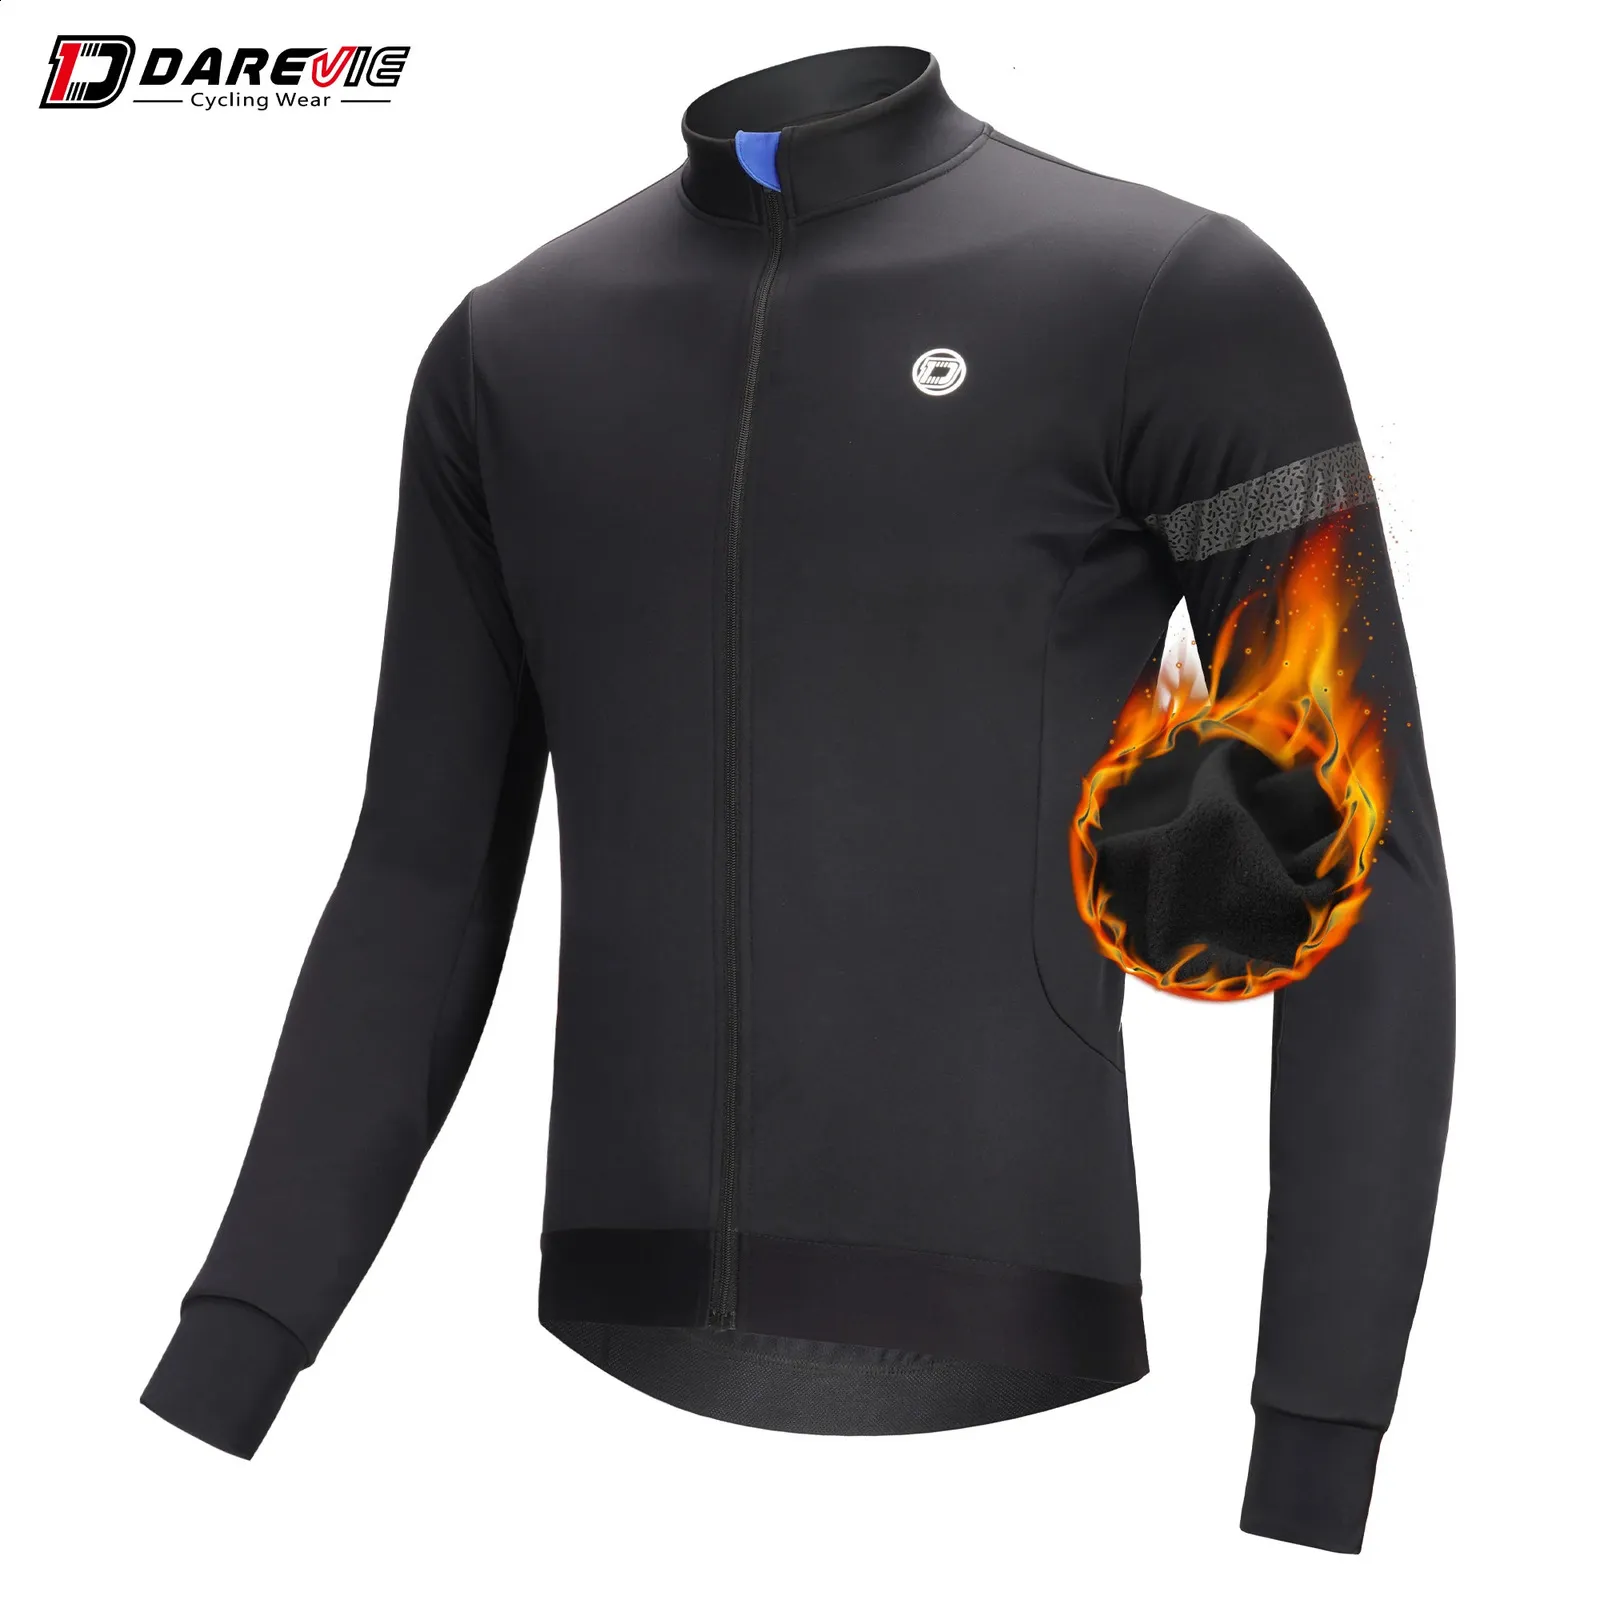 Darevie Cycling Jacket Thermal Fleece Warme Up Winter Windproect Cycling Jackets Män kvinnor för cykeljacka 240129